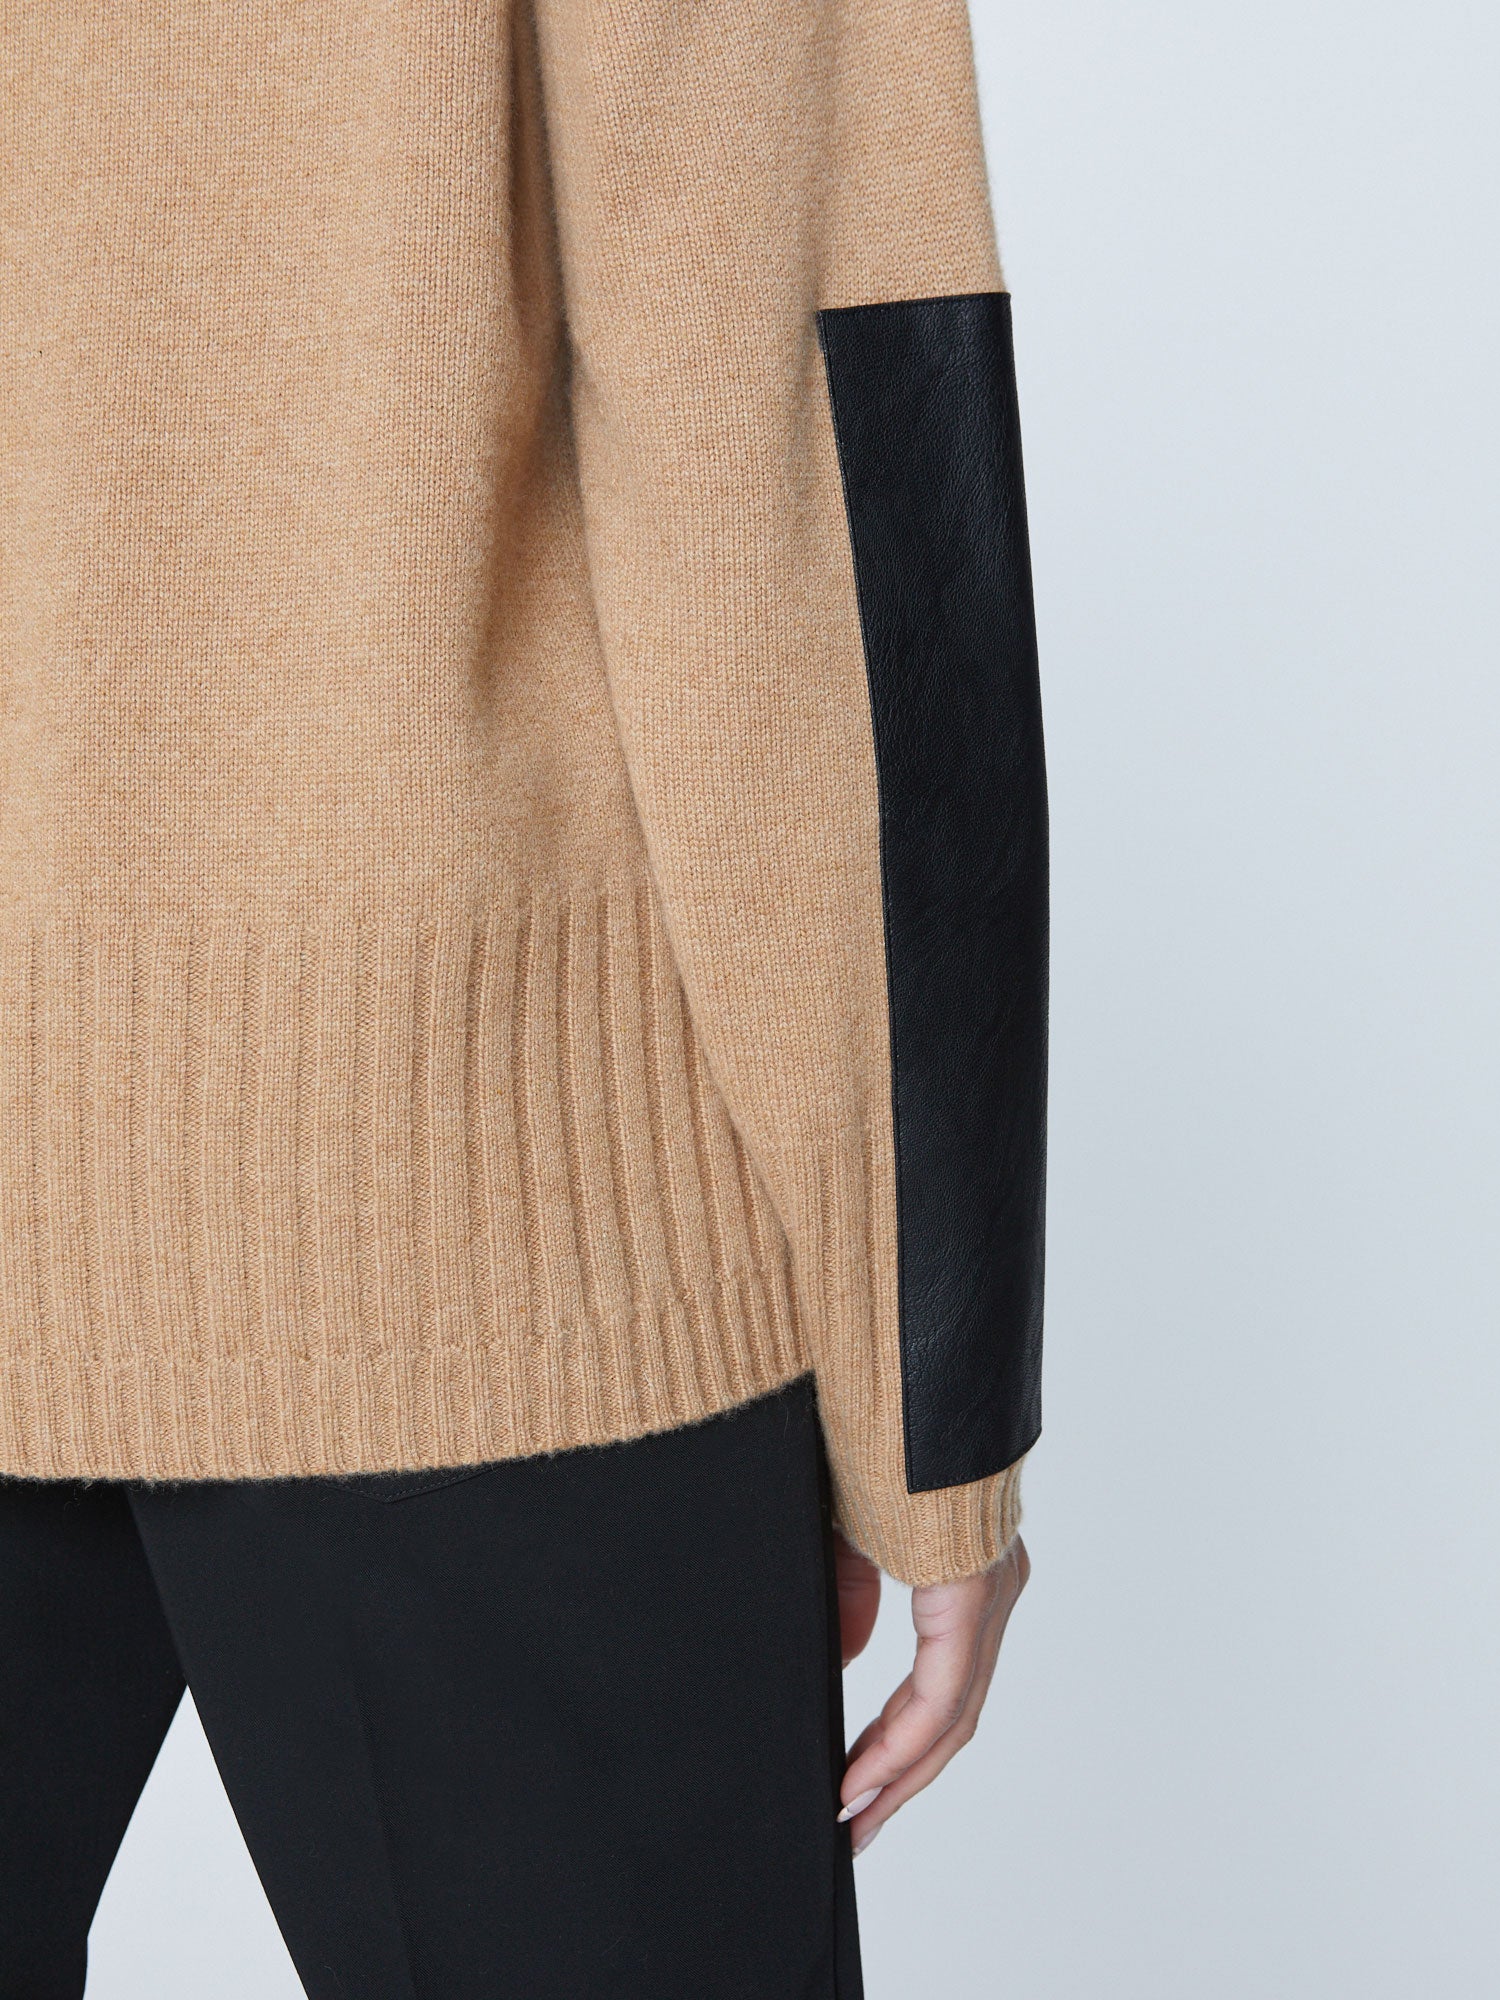 Yumi cashmere turtleneck tan sweater close up